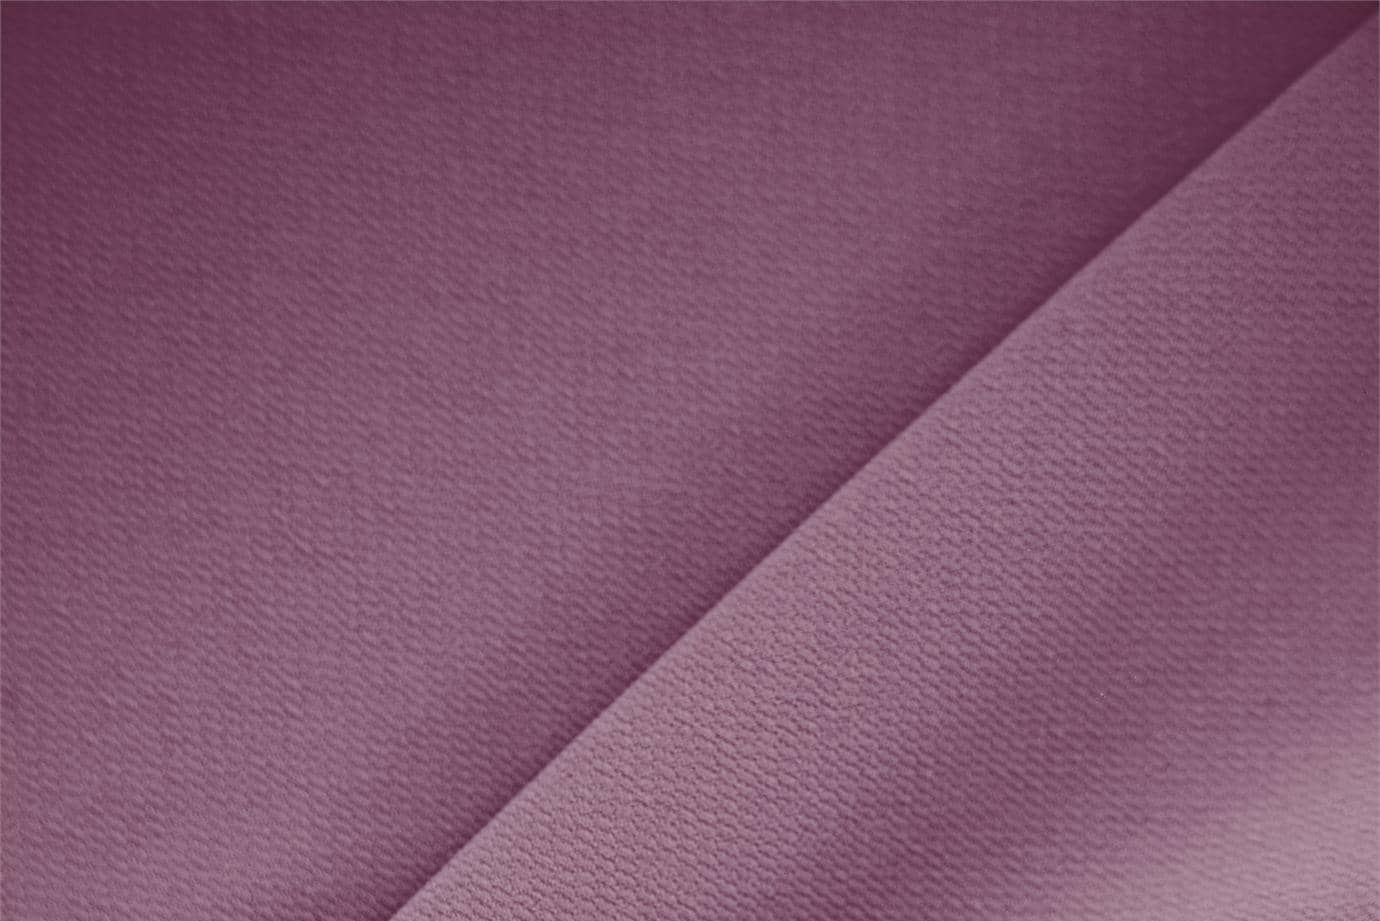 Aubergine Purple Polyester Crêpe Microfiber fabric for dressmaking